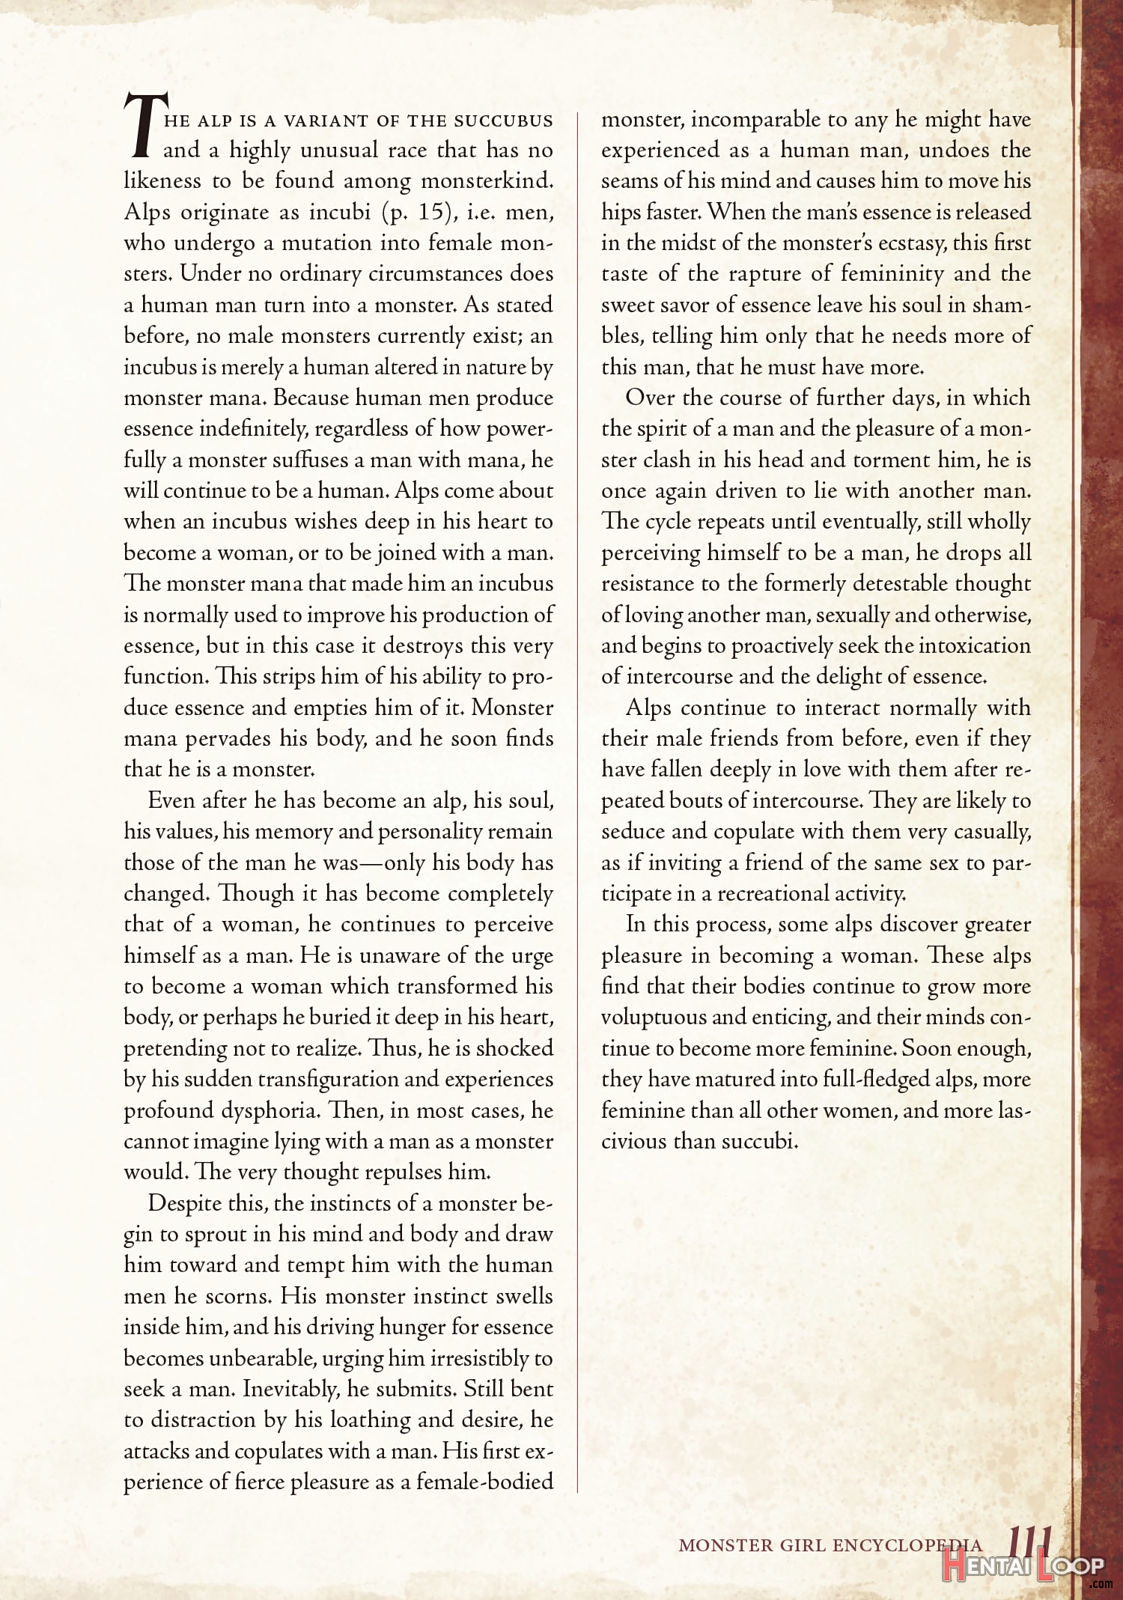 Monster Girl Encyclopedia Vol. 1 page 112